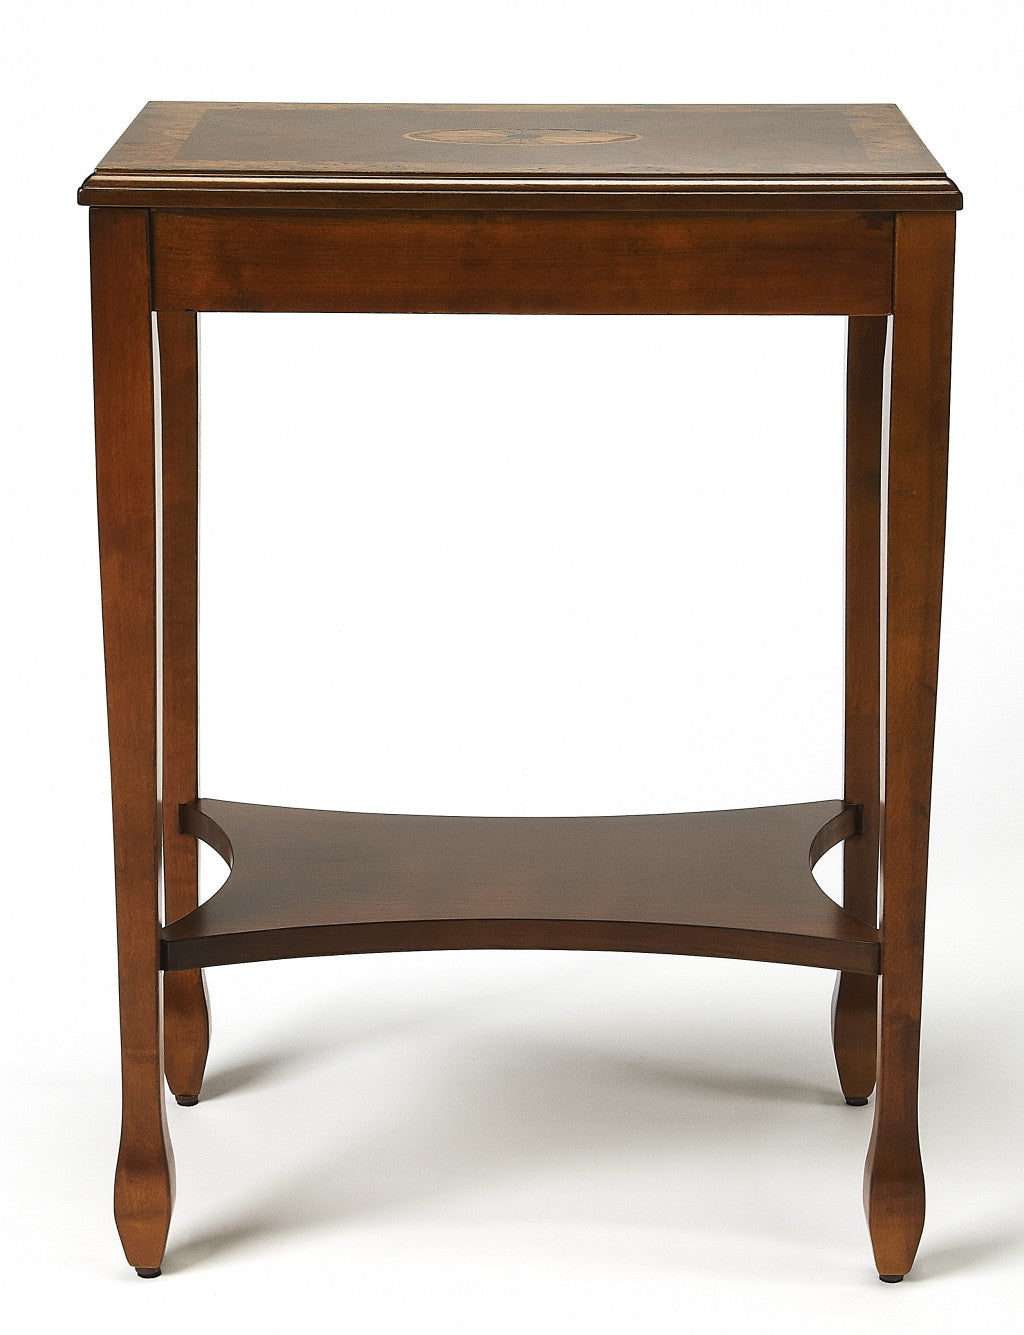 Medium Brown Wood Rectangular End Table With Shelf 25"